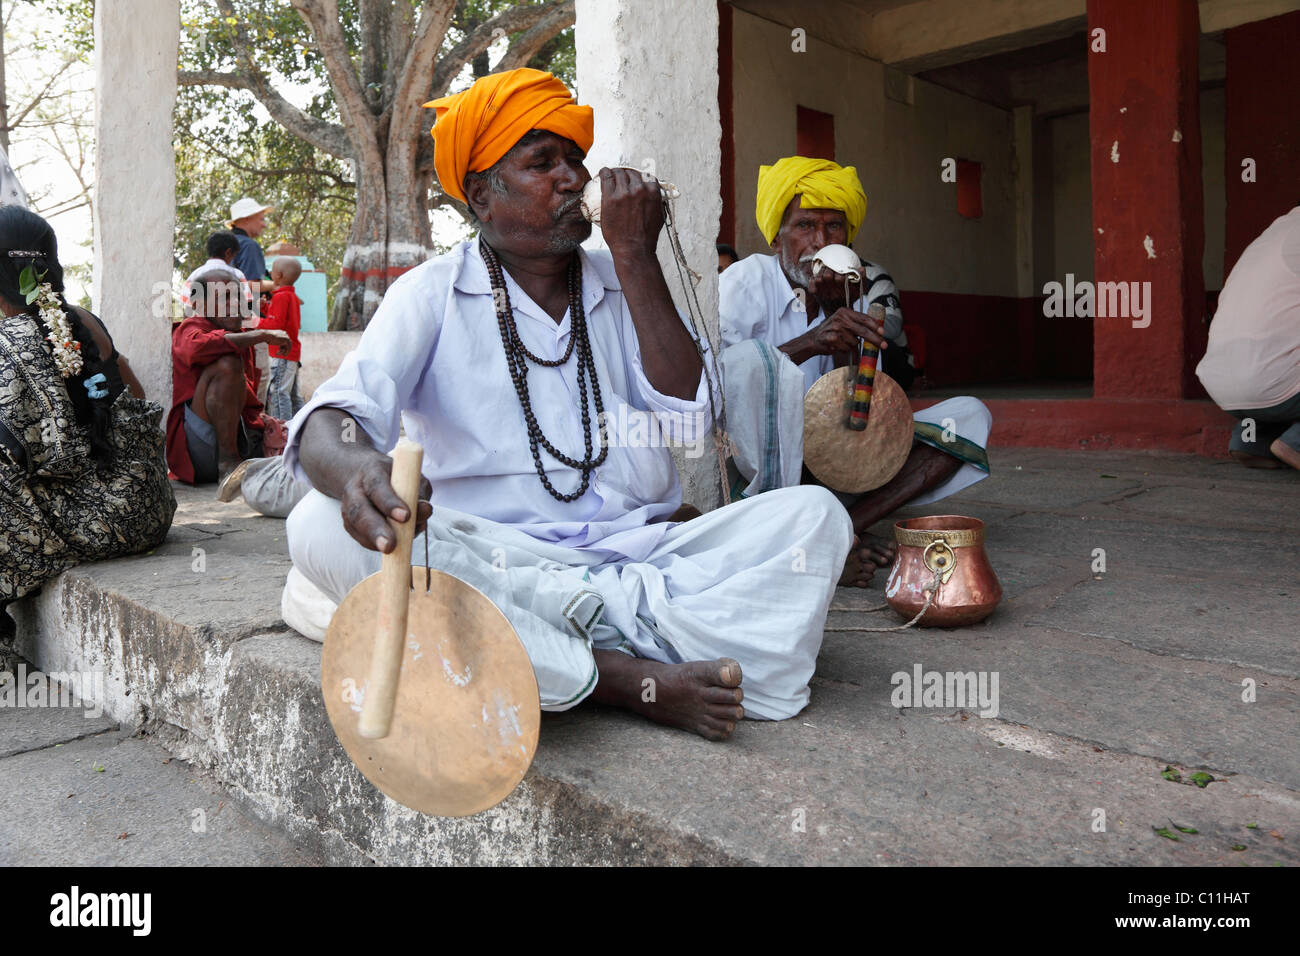 Soufflage indiens une conque et frappant un gong, Parashurama Temple, Nanjangud, Karnataka, Inde du Sud, Inde, Asie du Sud, Asie Banque D'Images